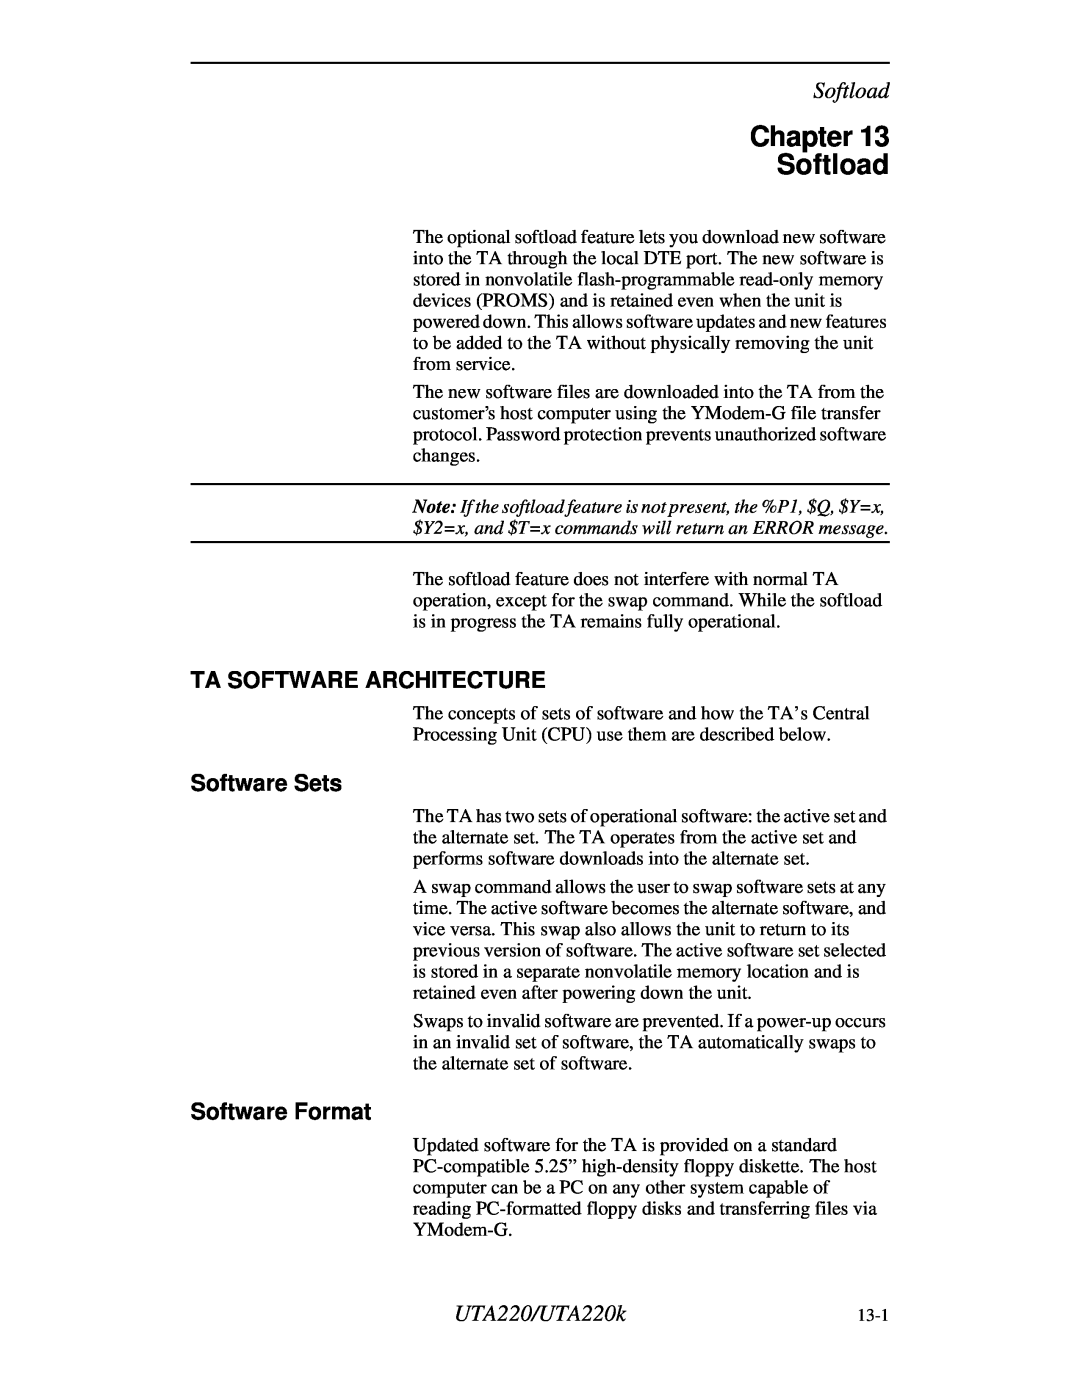 Northern UTA220/UTA220k manual Chapter Softload, Ta Software Architecture, Software Sets, Software Format 